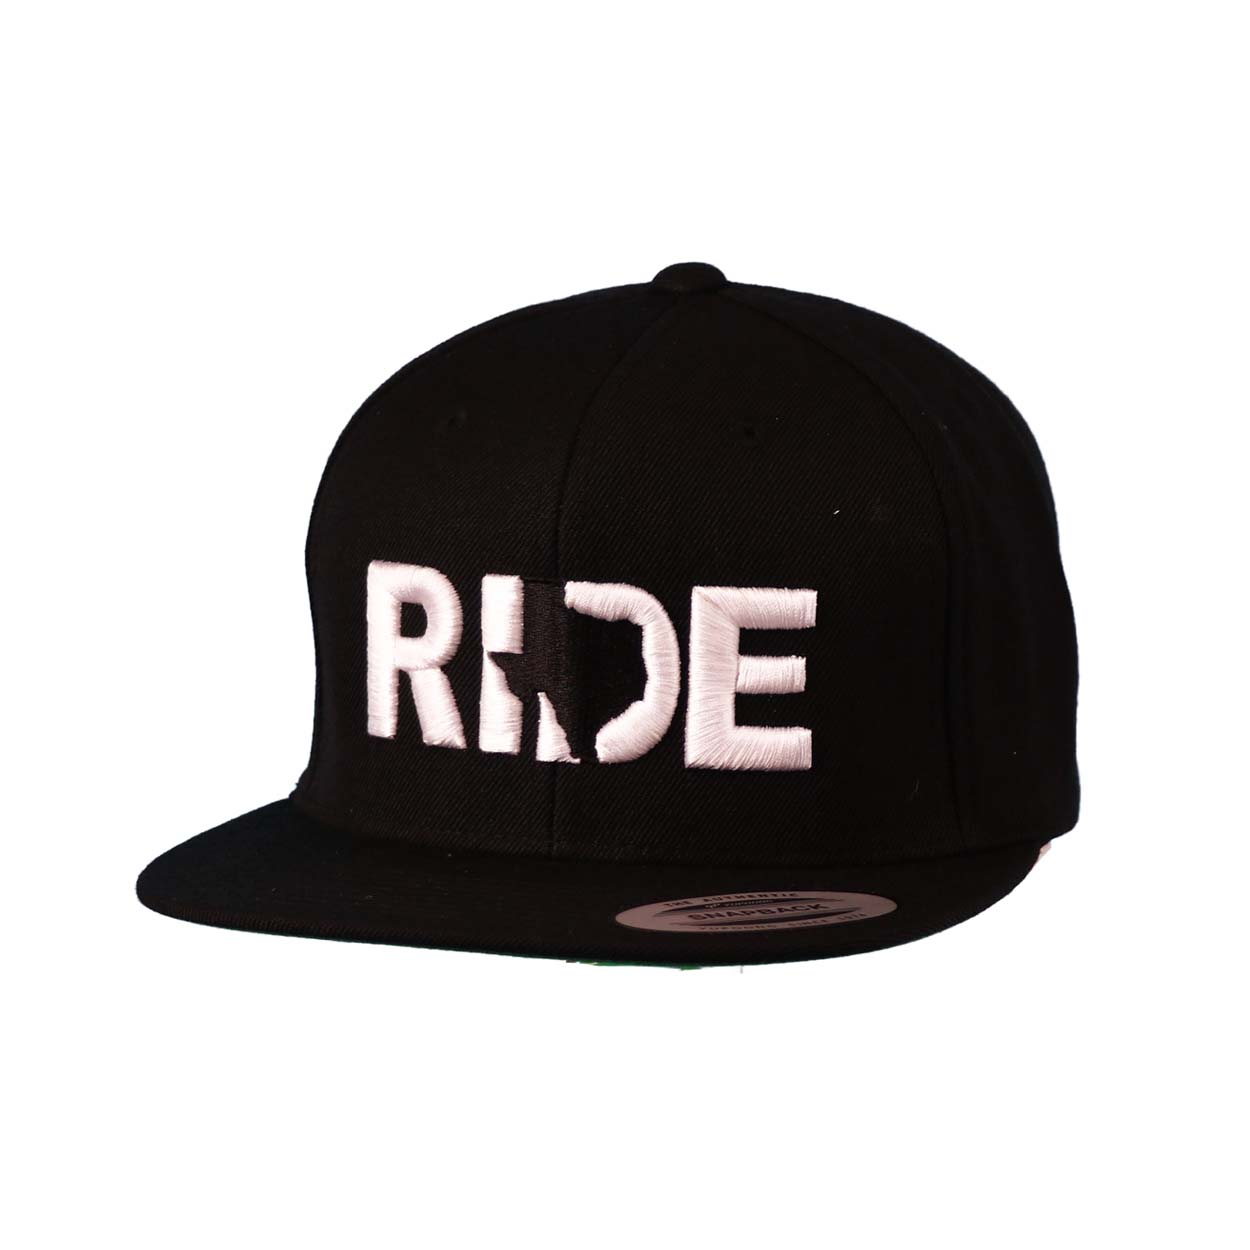 Ride Texas Classic Embroidered Snapback Flat Brim Hat Black/White